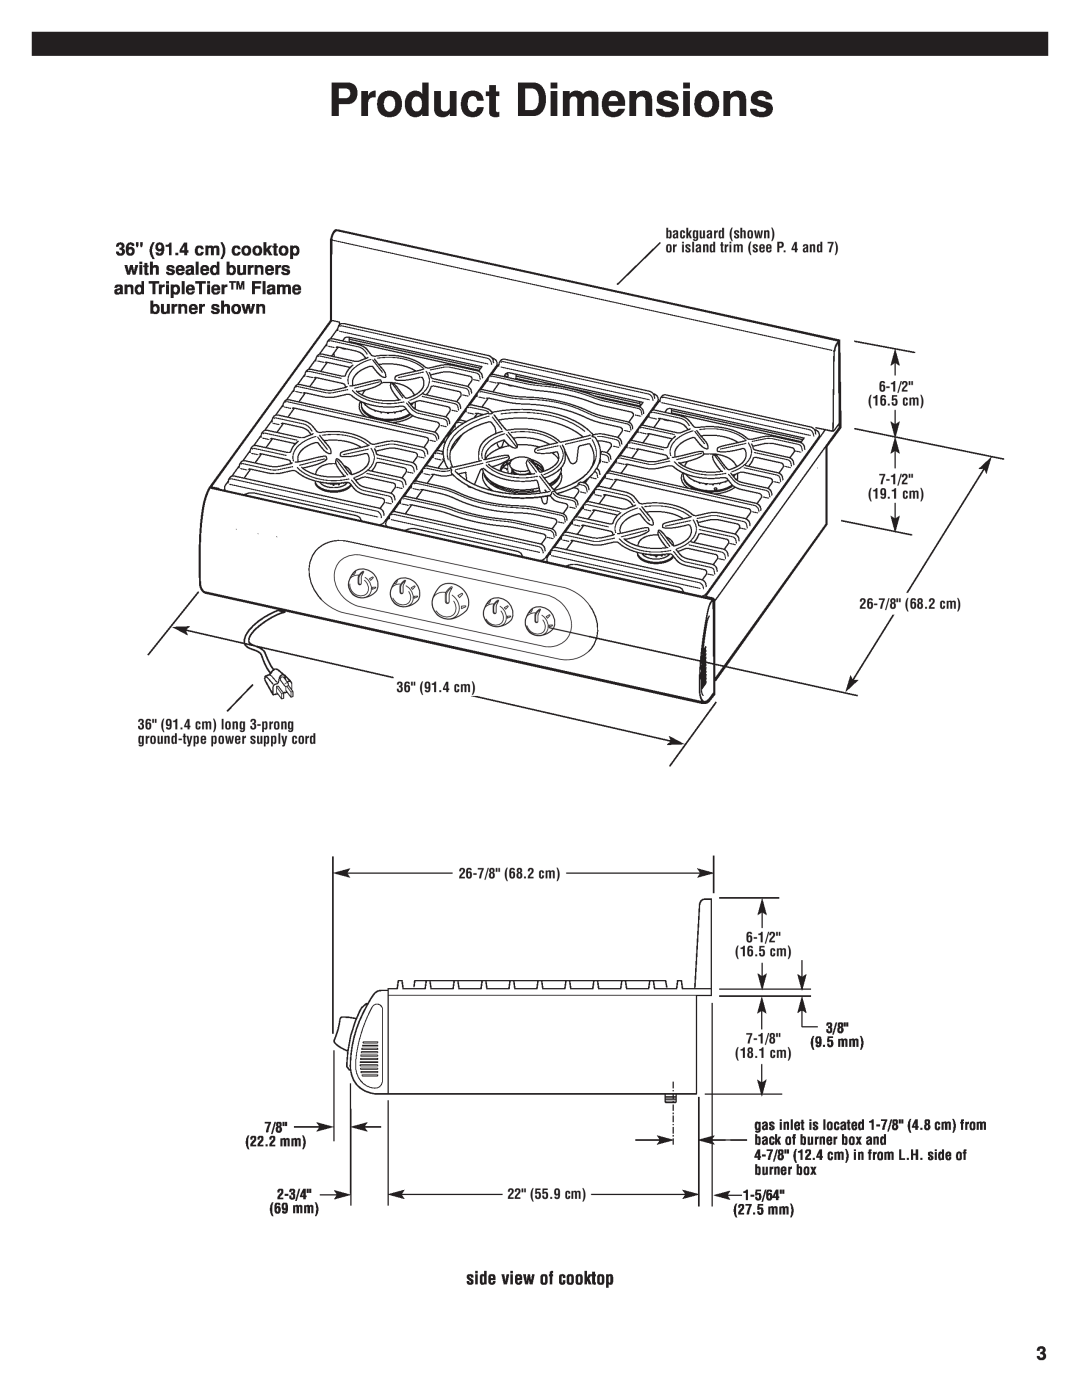 KitchenAid 8285418 installation instructions Product Dimensions, 7/8 22.2 mm 2-3/4 69 mm, 7-1/8 9.5 mm 18.1 cm, 27.5 mm 